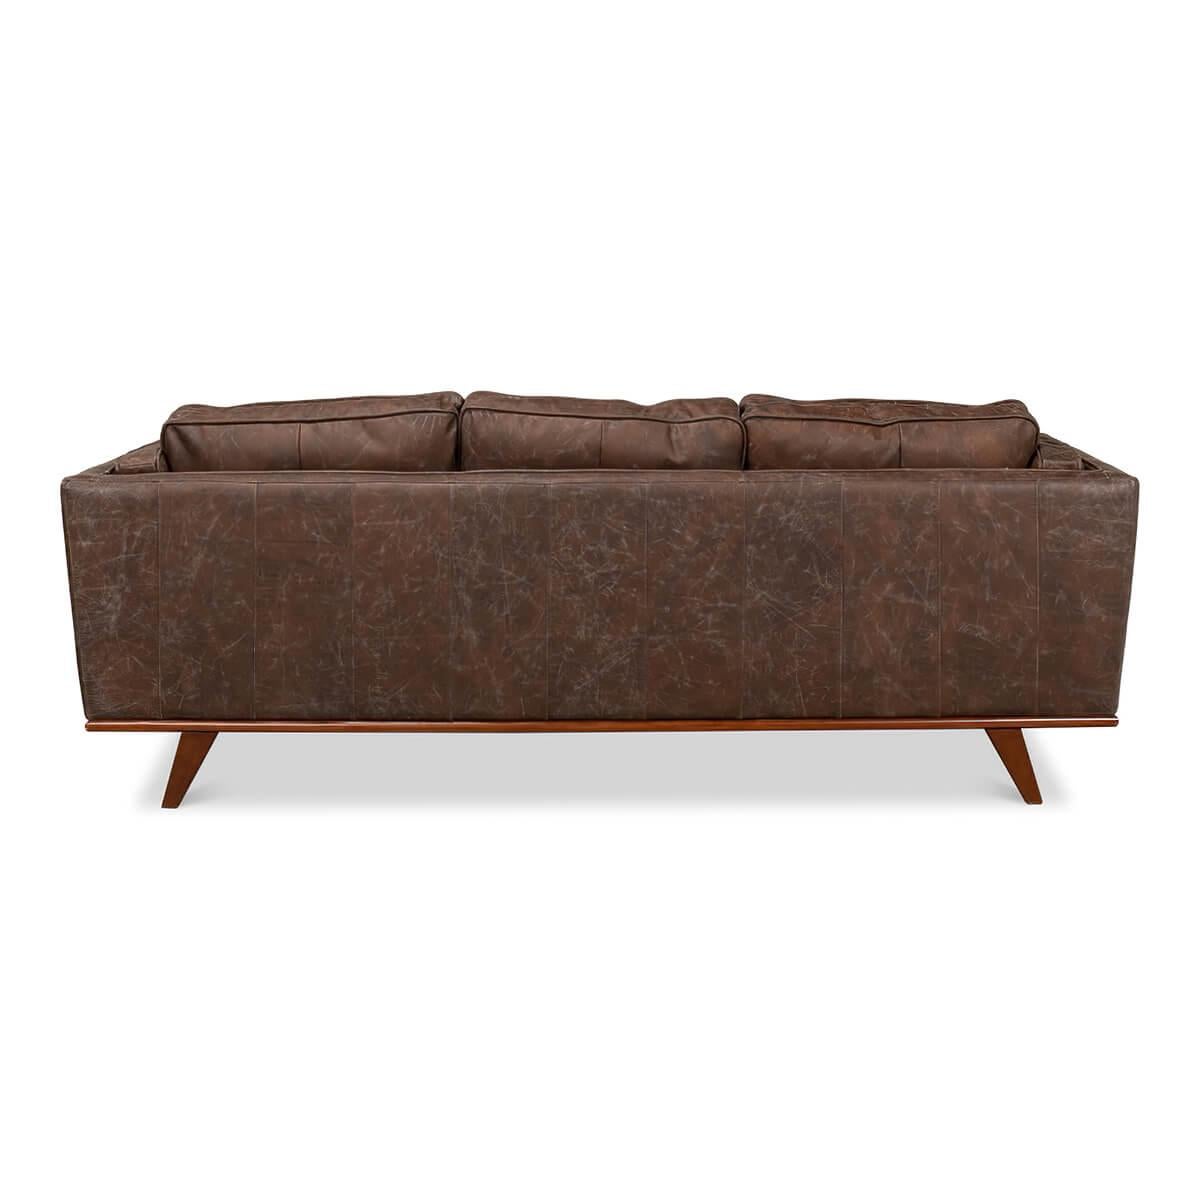 Contemporary European Mid Century Style Leather Sofa